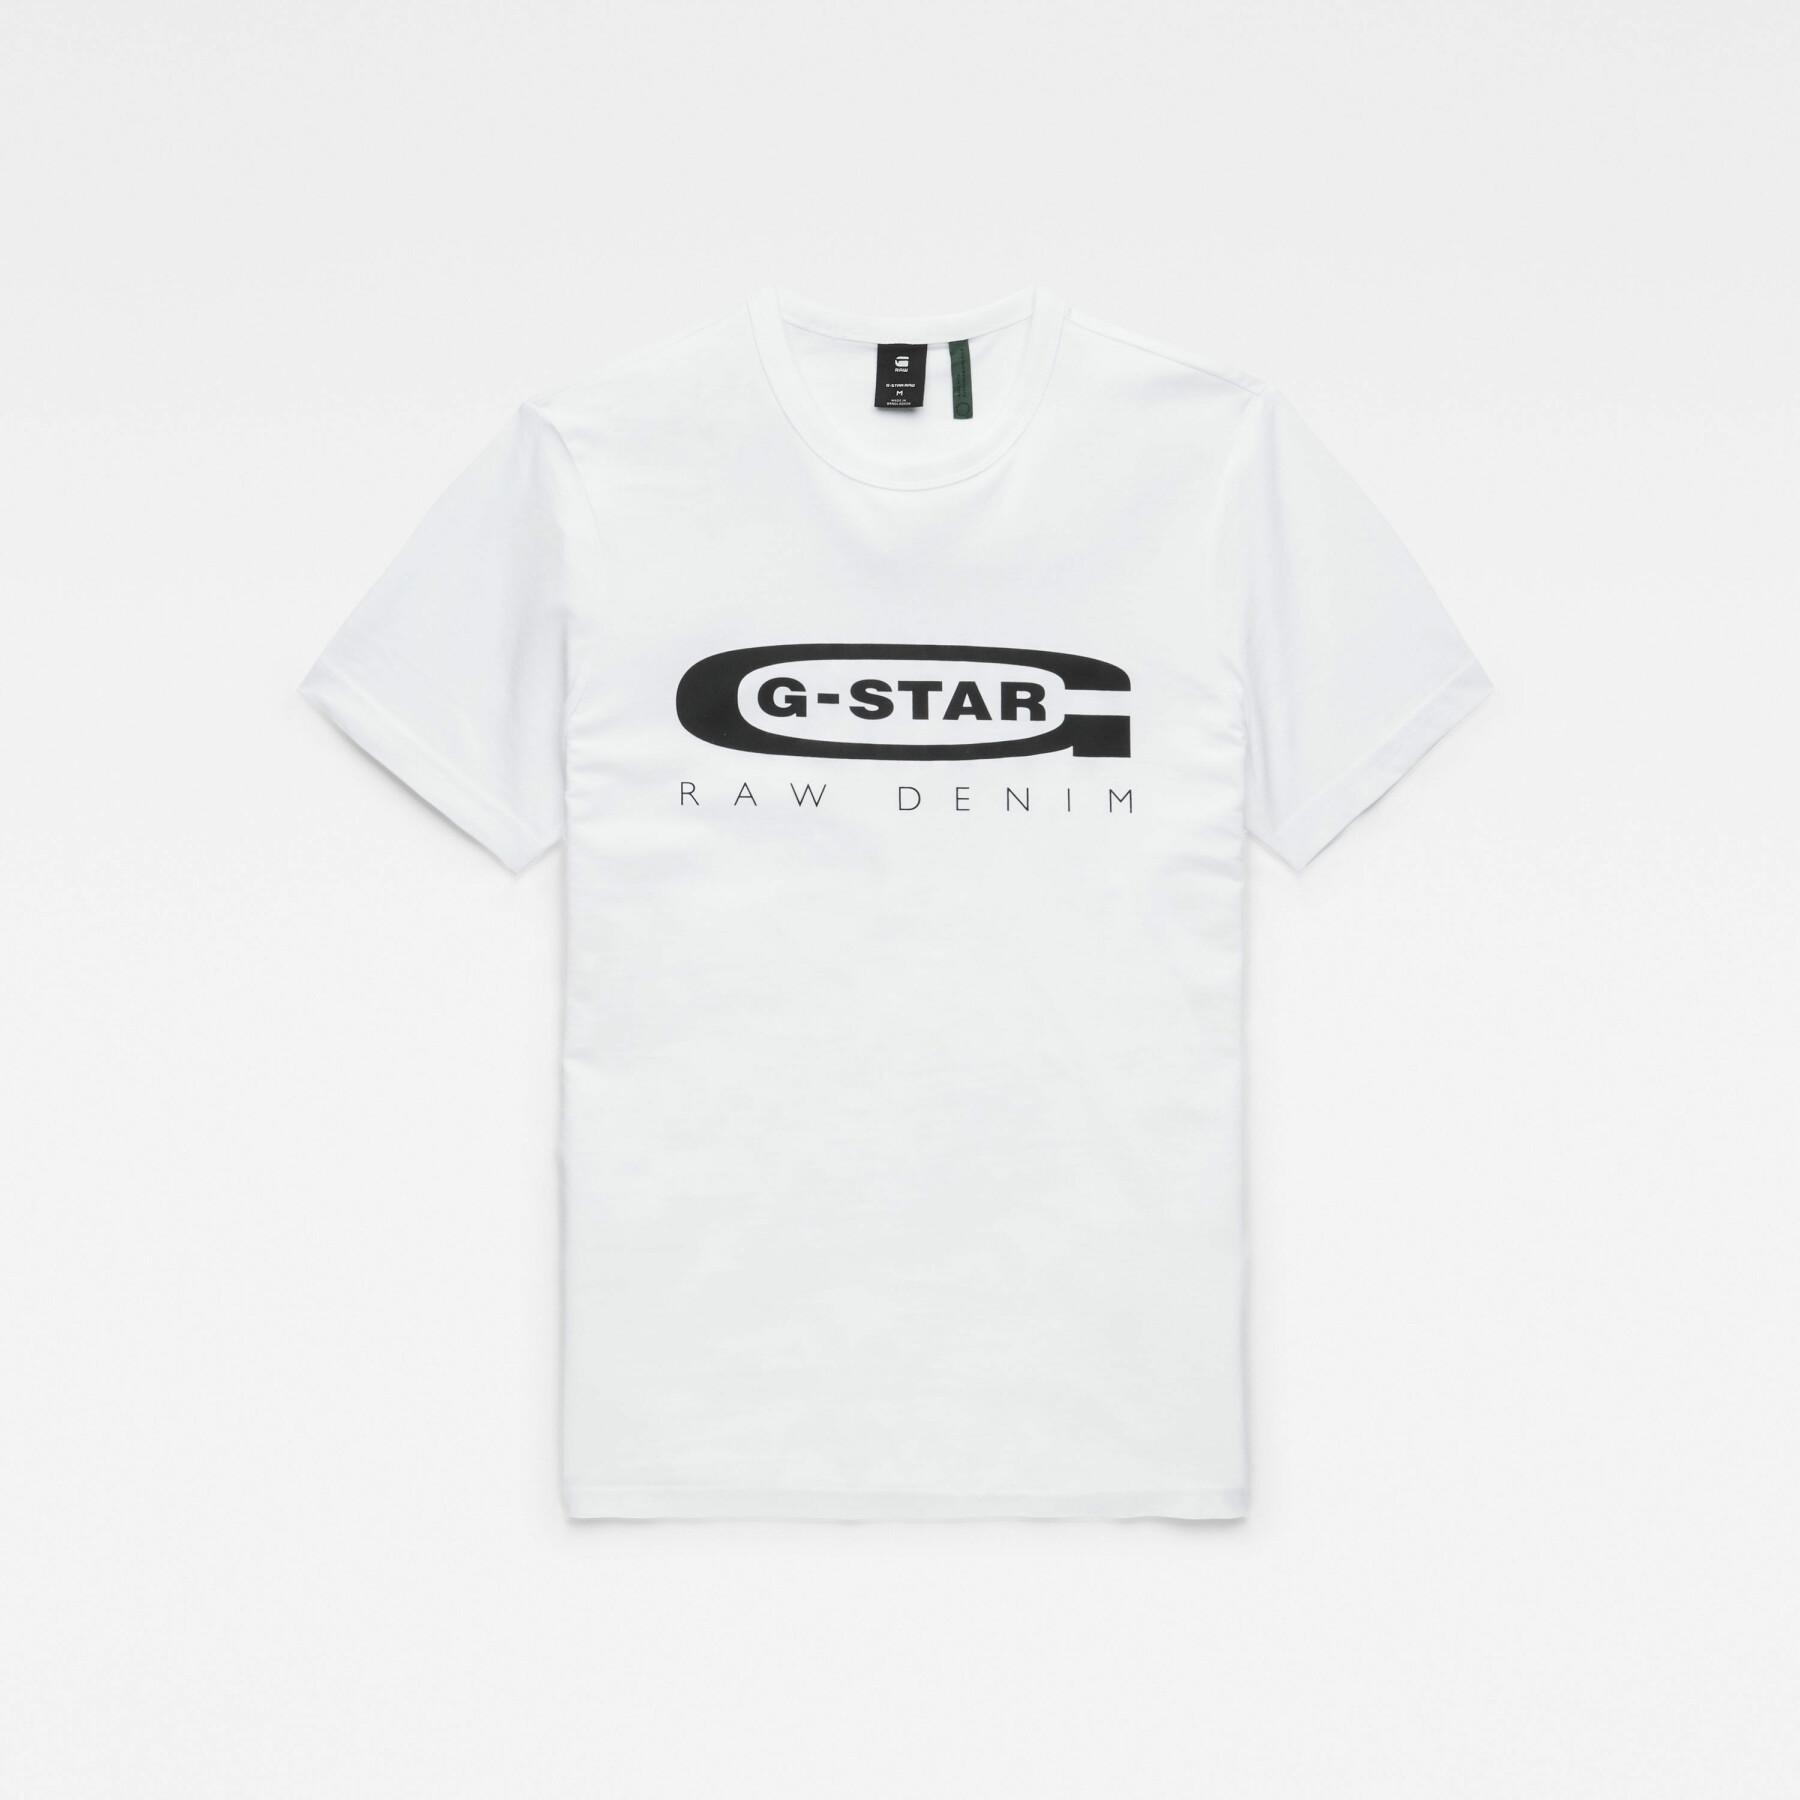 Camiseta mangas cortas G-Star Graphic 4 slim